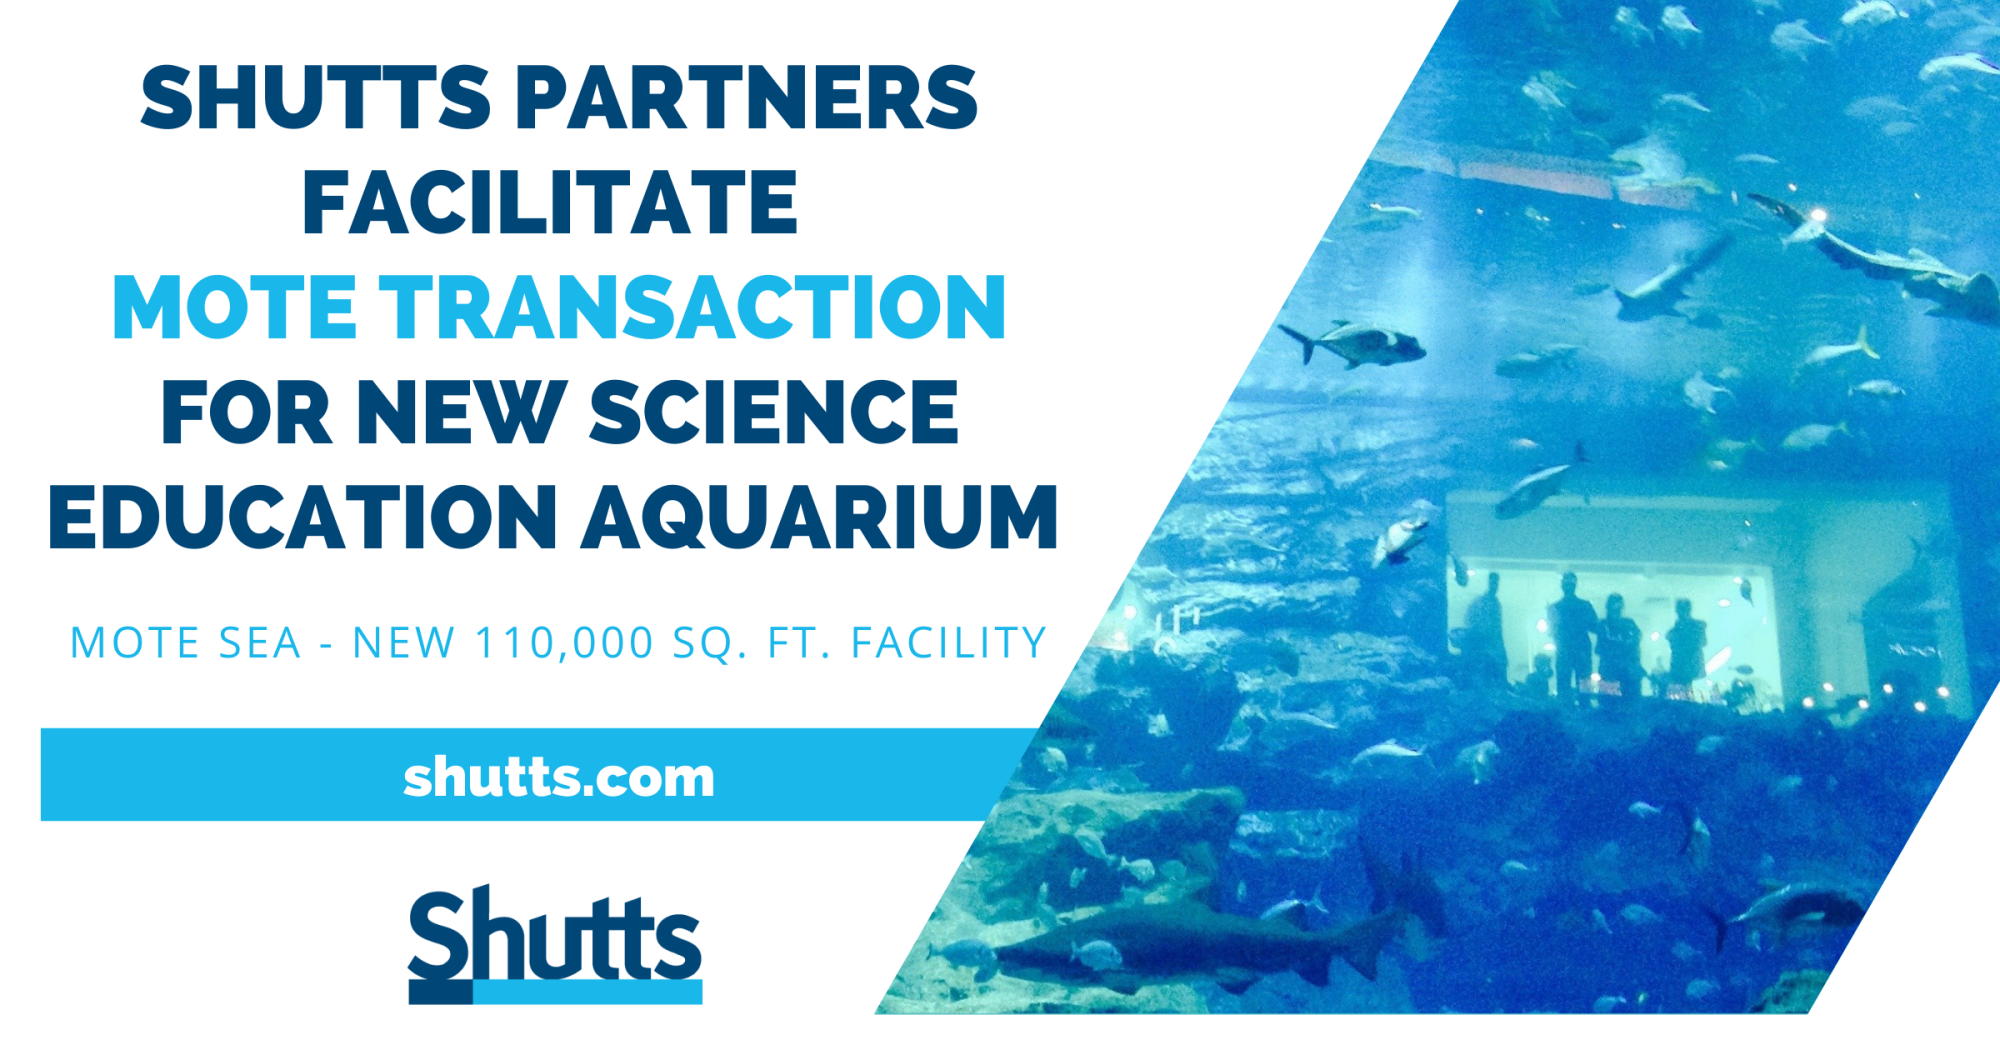 Shutts Partners Facilitate Mote Marine Transaction for New Science Education Aquarium 